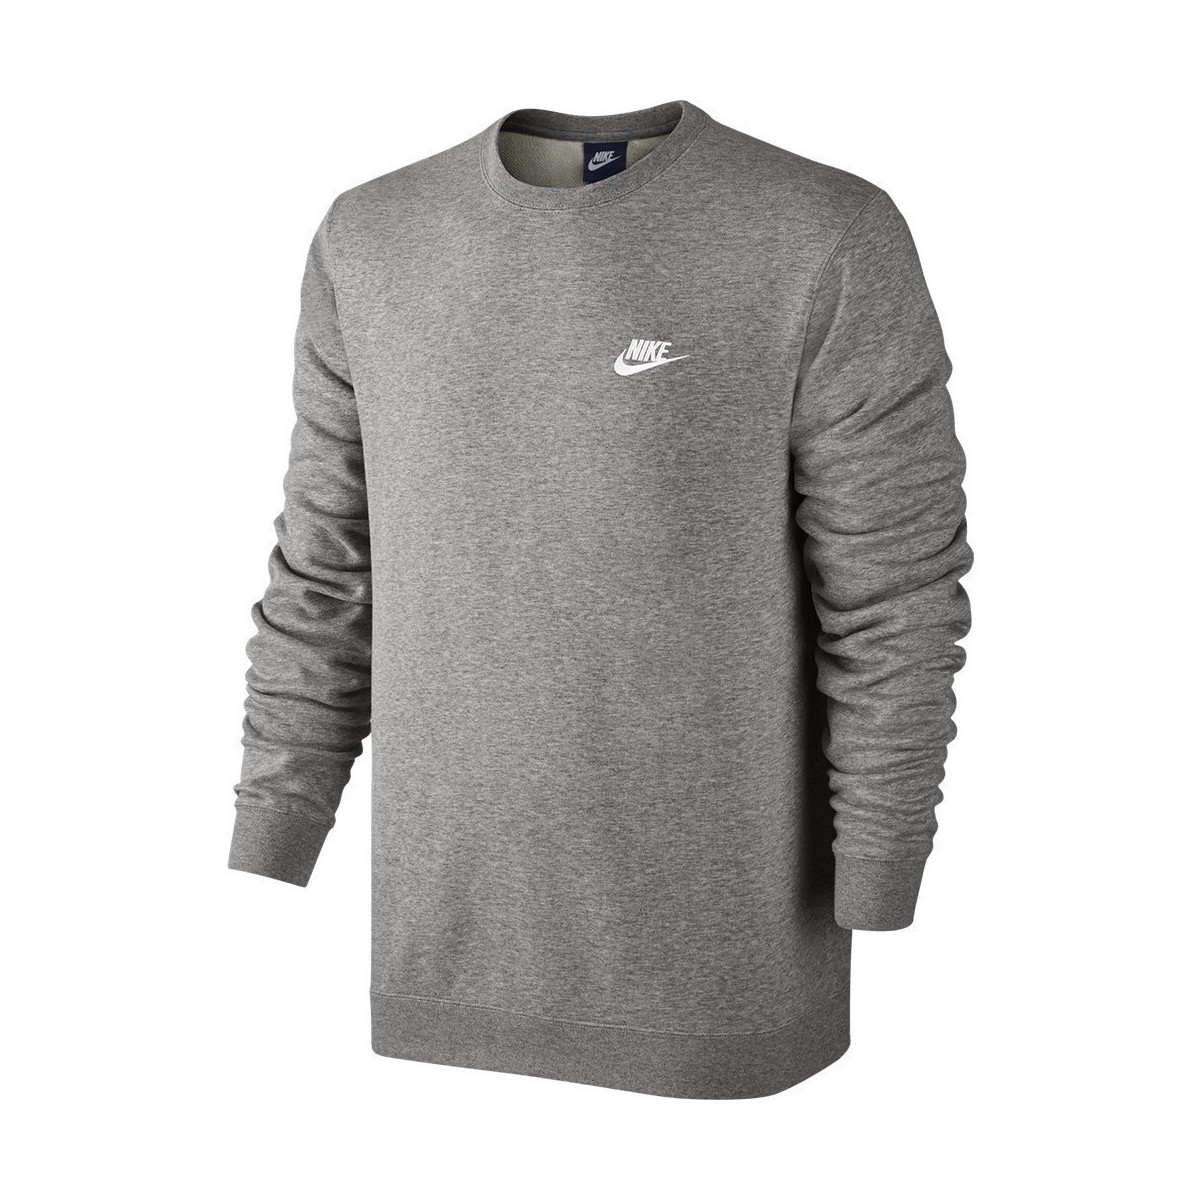 Kleidung Herren Sweatshirts Nike Club Crew FT Grau